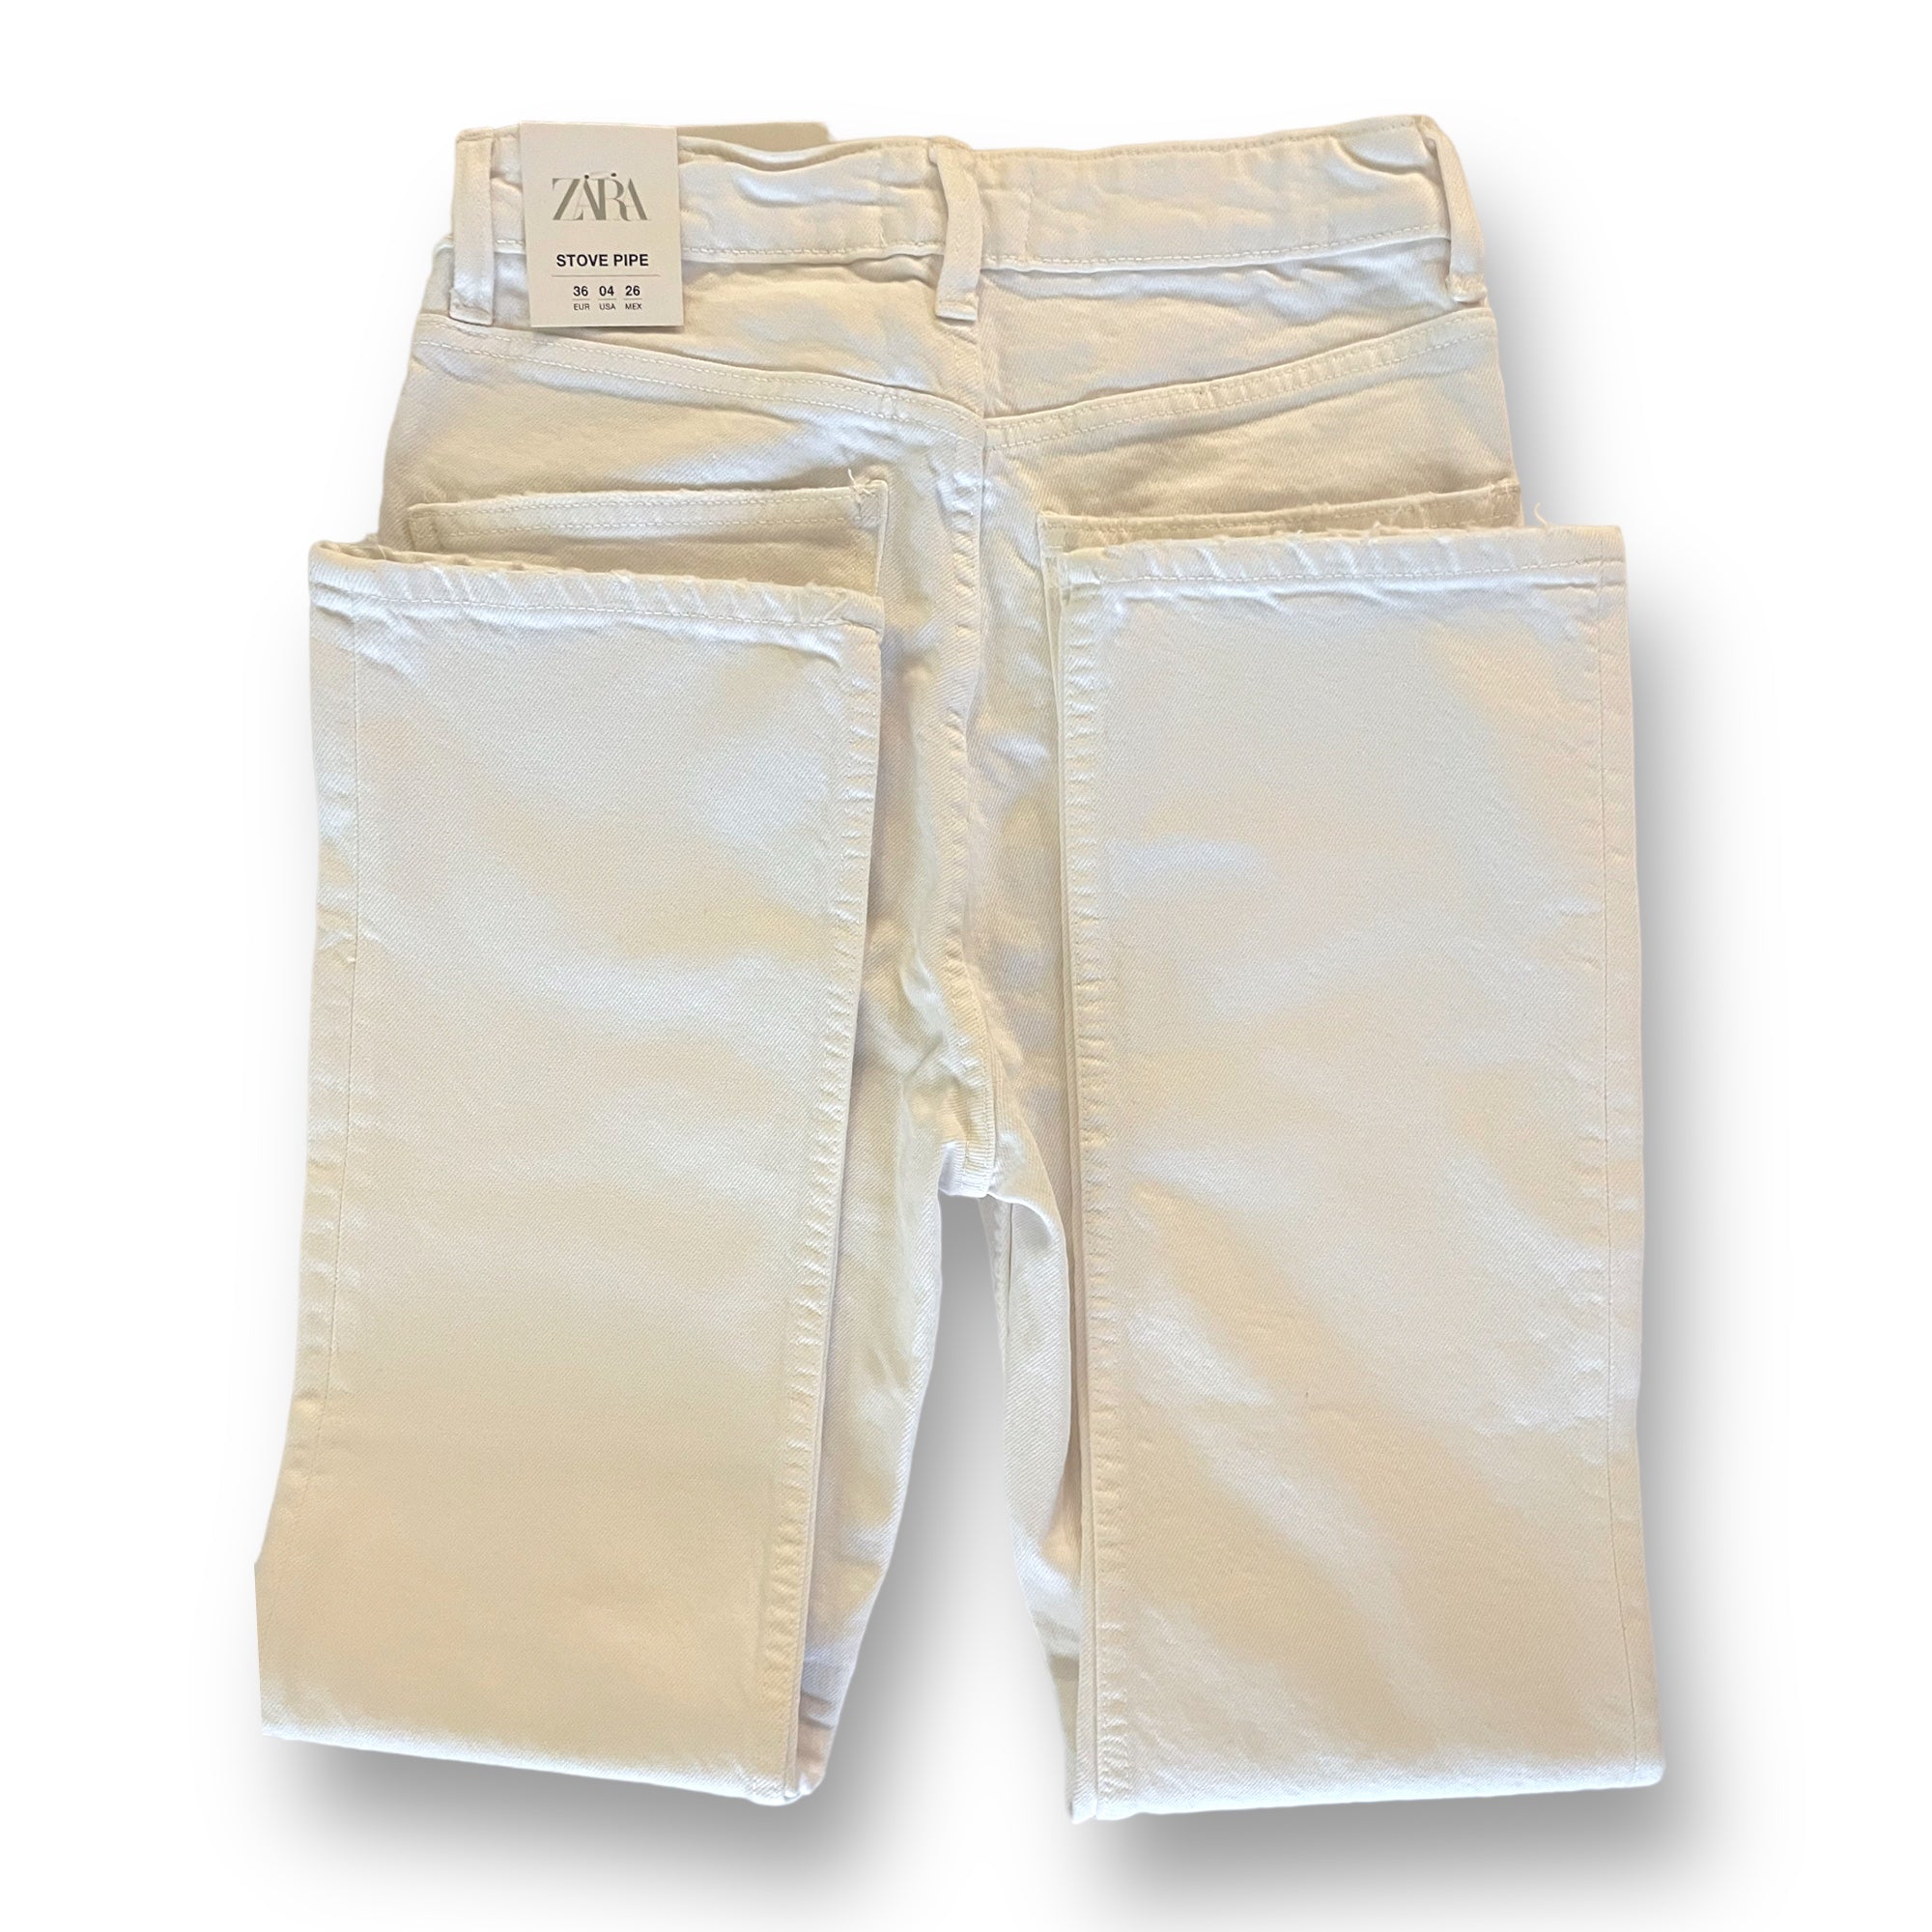 ZARA High-Rise STOVE PIPE White Denim Jeans |Size: EU 34 US 4|